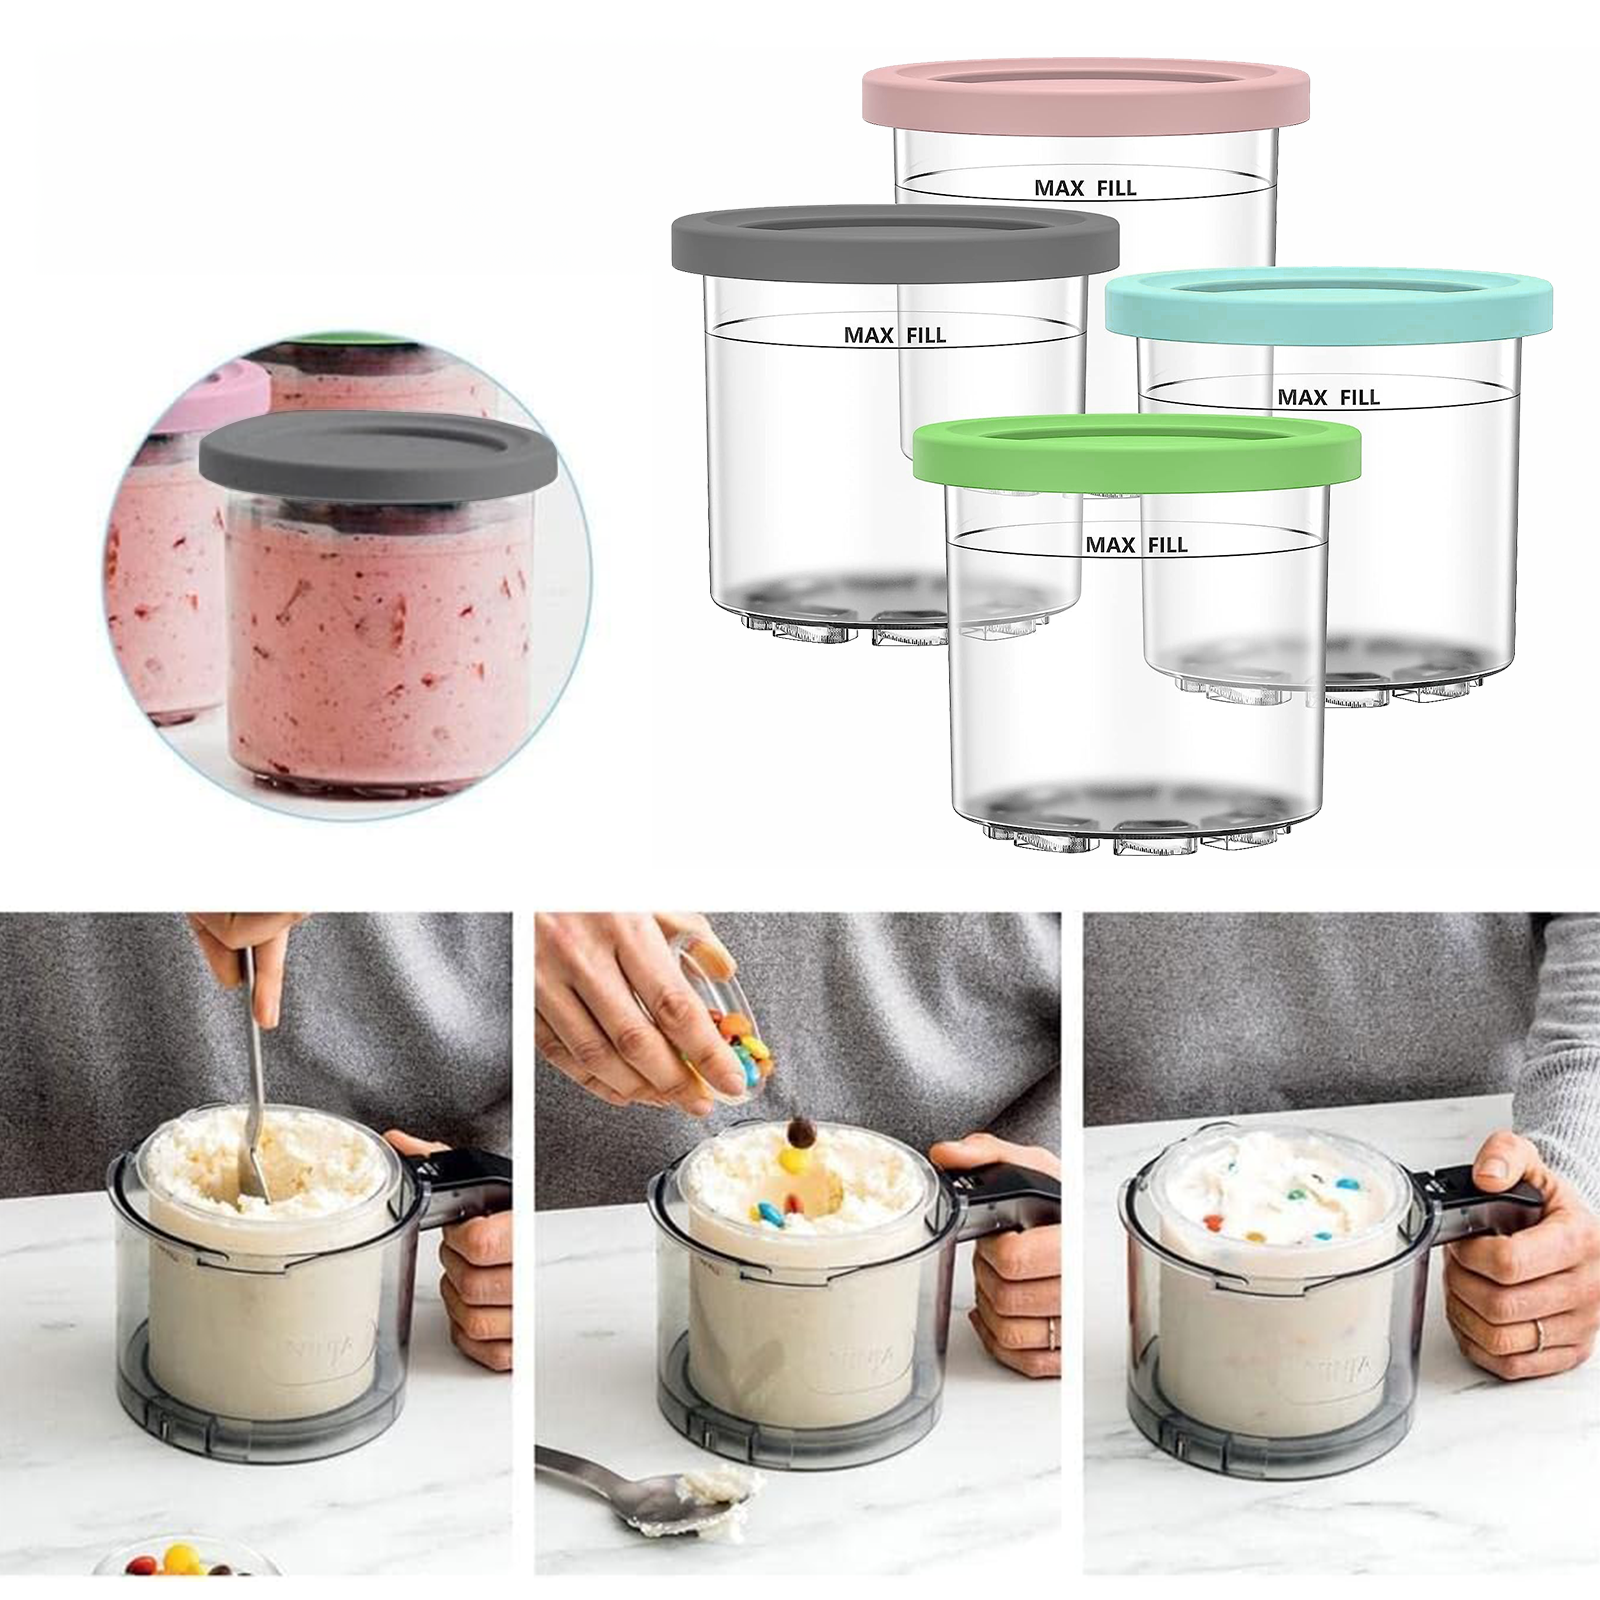 Ice Cream Containers For Homemade Ice Cream- Reusable Ice Cream